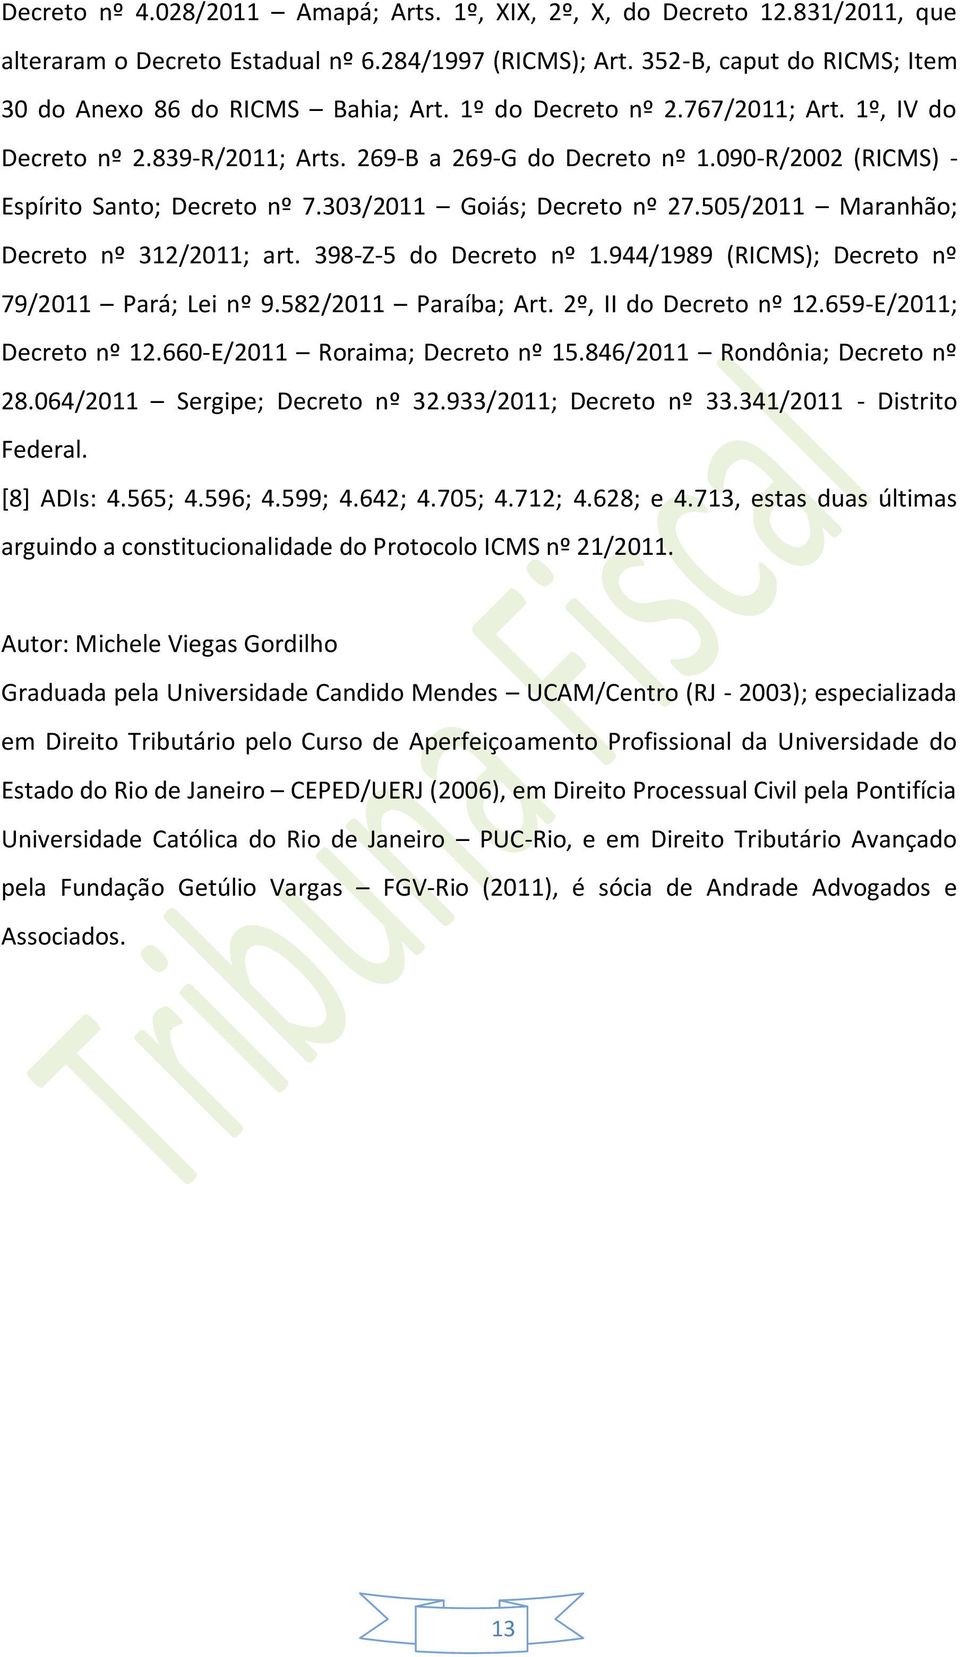 505/2011 Maranhão; Decreto nº 312/2011; art. 398-Z-5 do Decreto nº 1.944/1989 (RICMS); Decreto nº 79/2011 Pará; Lei nº 9.582/2011 Paraíba; Art. 2º, II do Decreto nº 12.659-E/2011; Decreto nº 12.